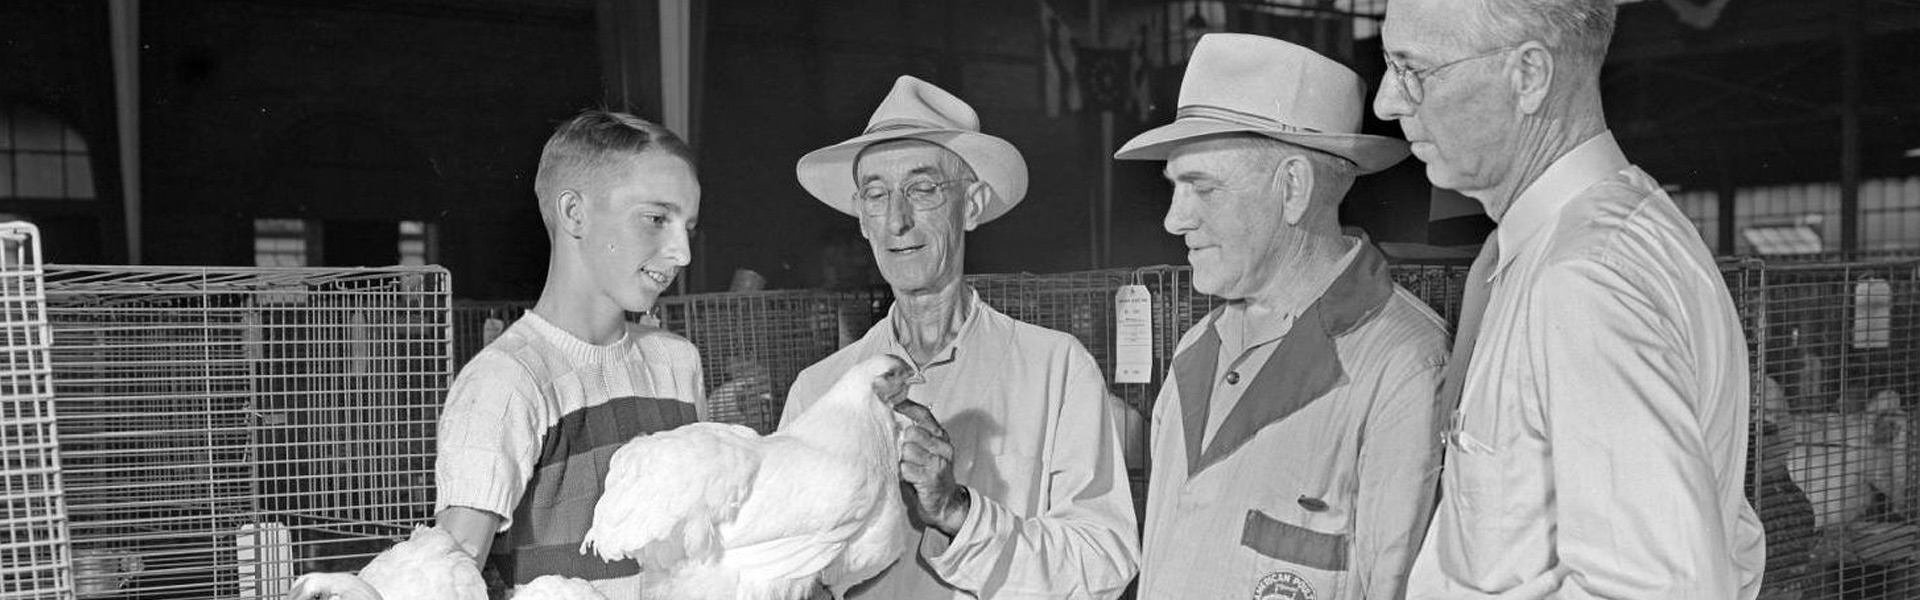 Chicken judging at State Fair, 1950